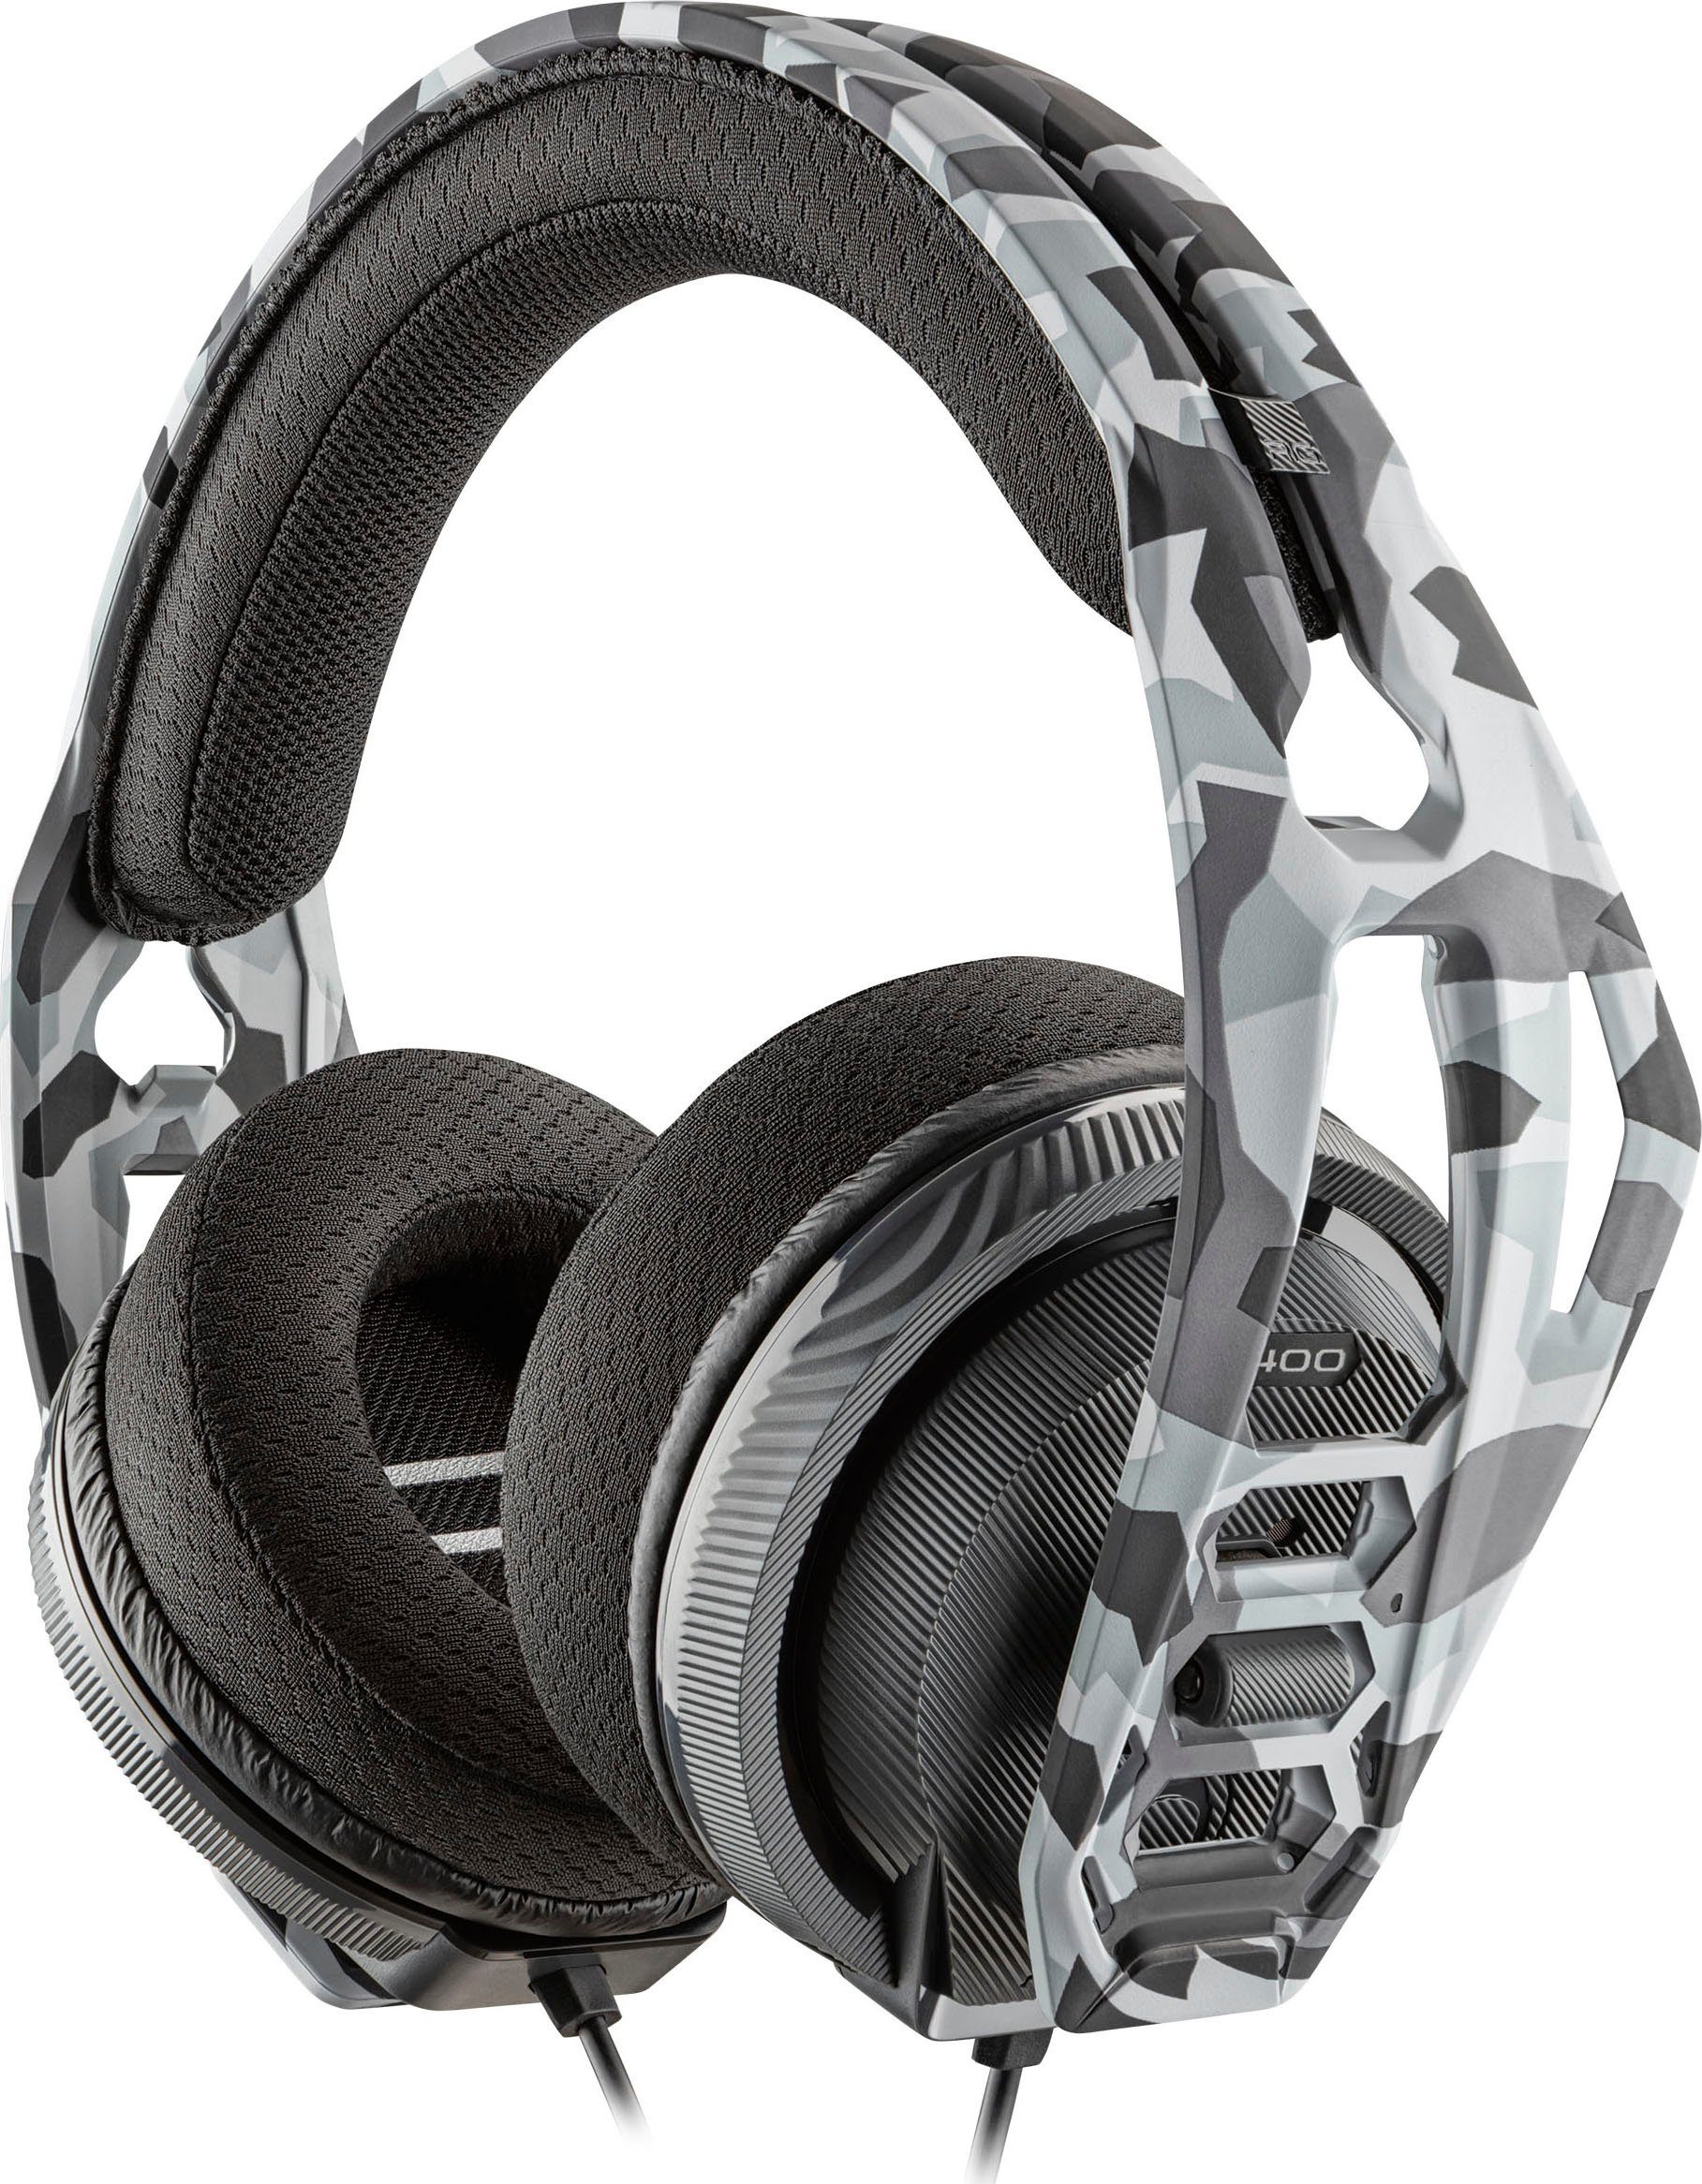 (Mikrofon Nacon 400HS Ear, Klinke nacon Gaming-Headset, PS4-Lizenz) kabelgebunden, Camo-schwarz, mm Mac, Over RIG abnehmbar, Gaming- Stereo, 3,5 PC, Headset